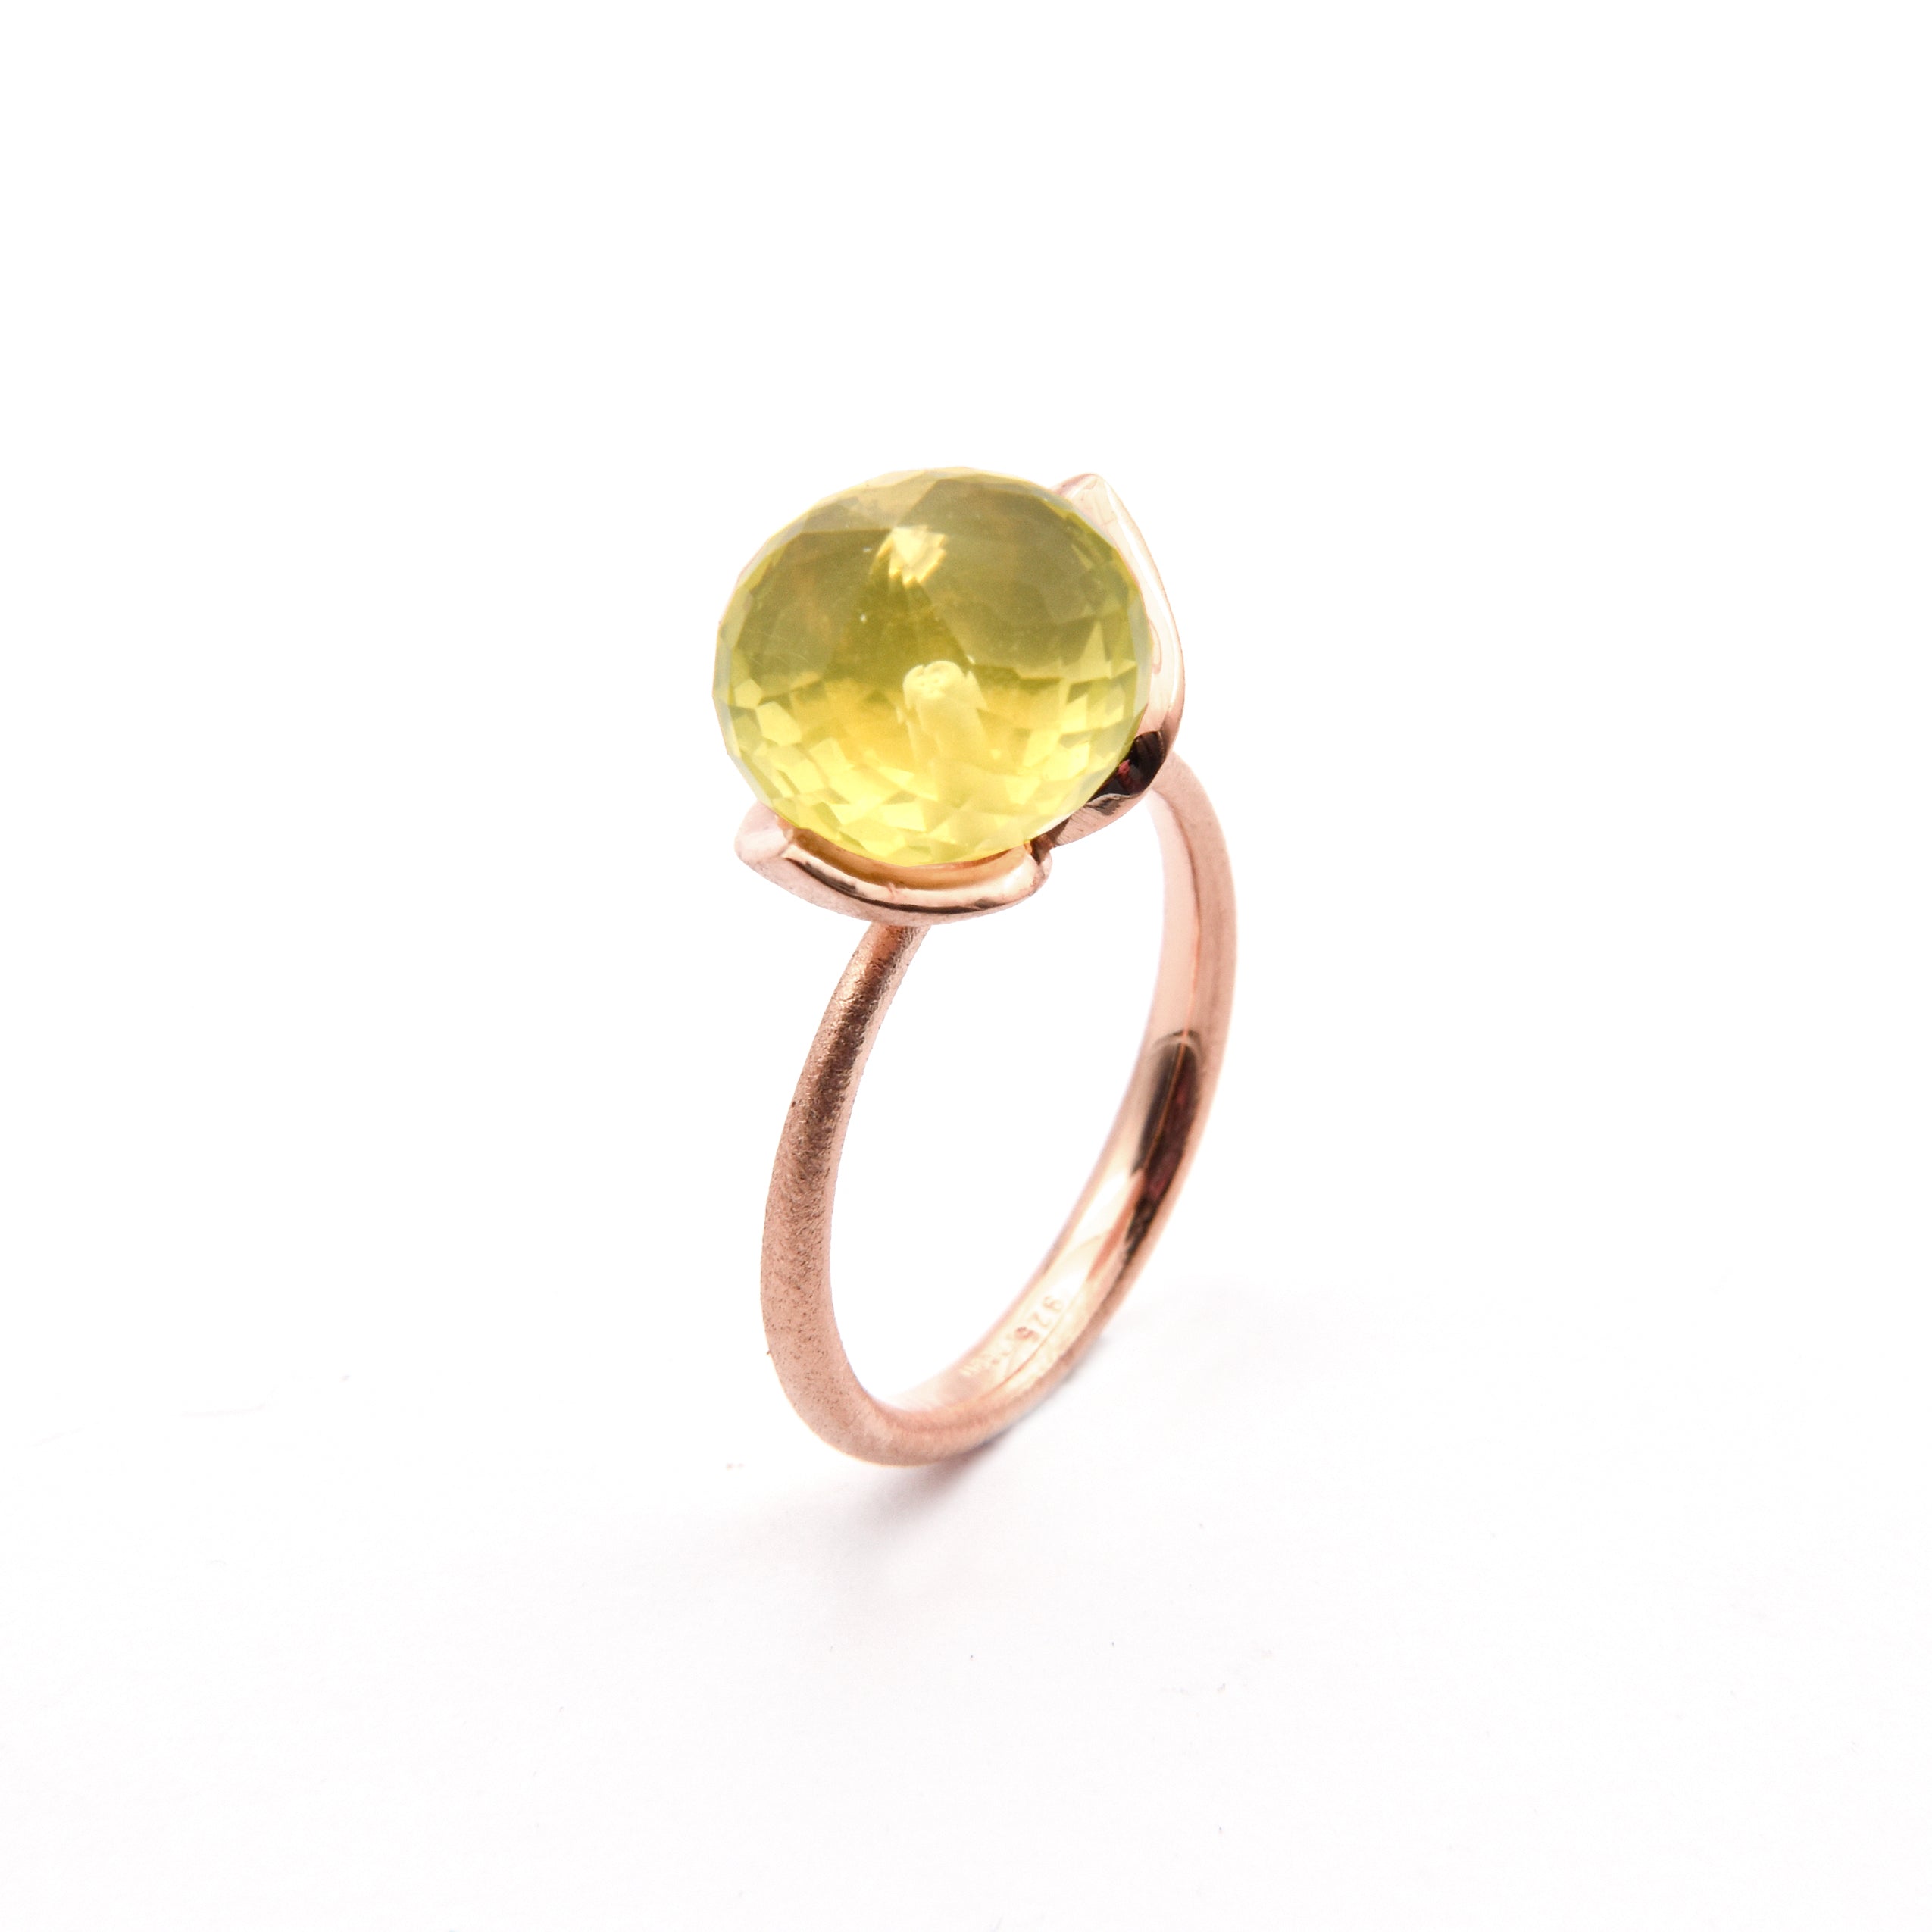 Dolce ring "medium" with lemon quartz 925/-